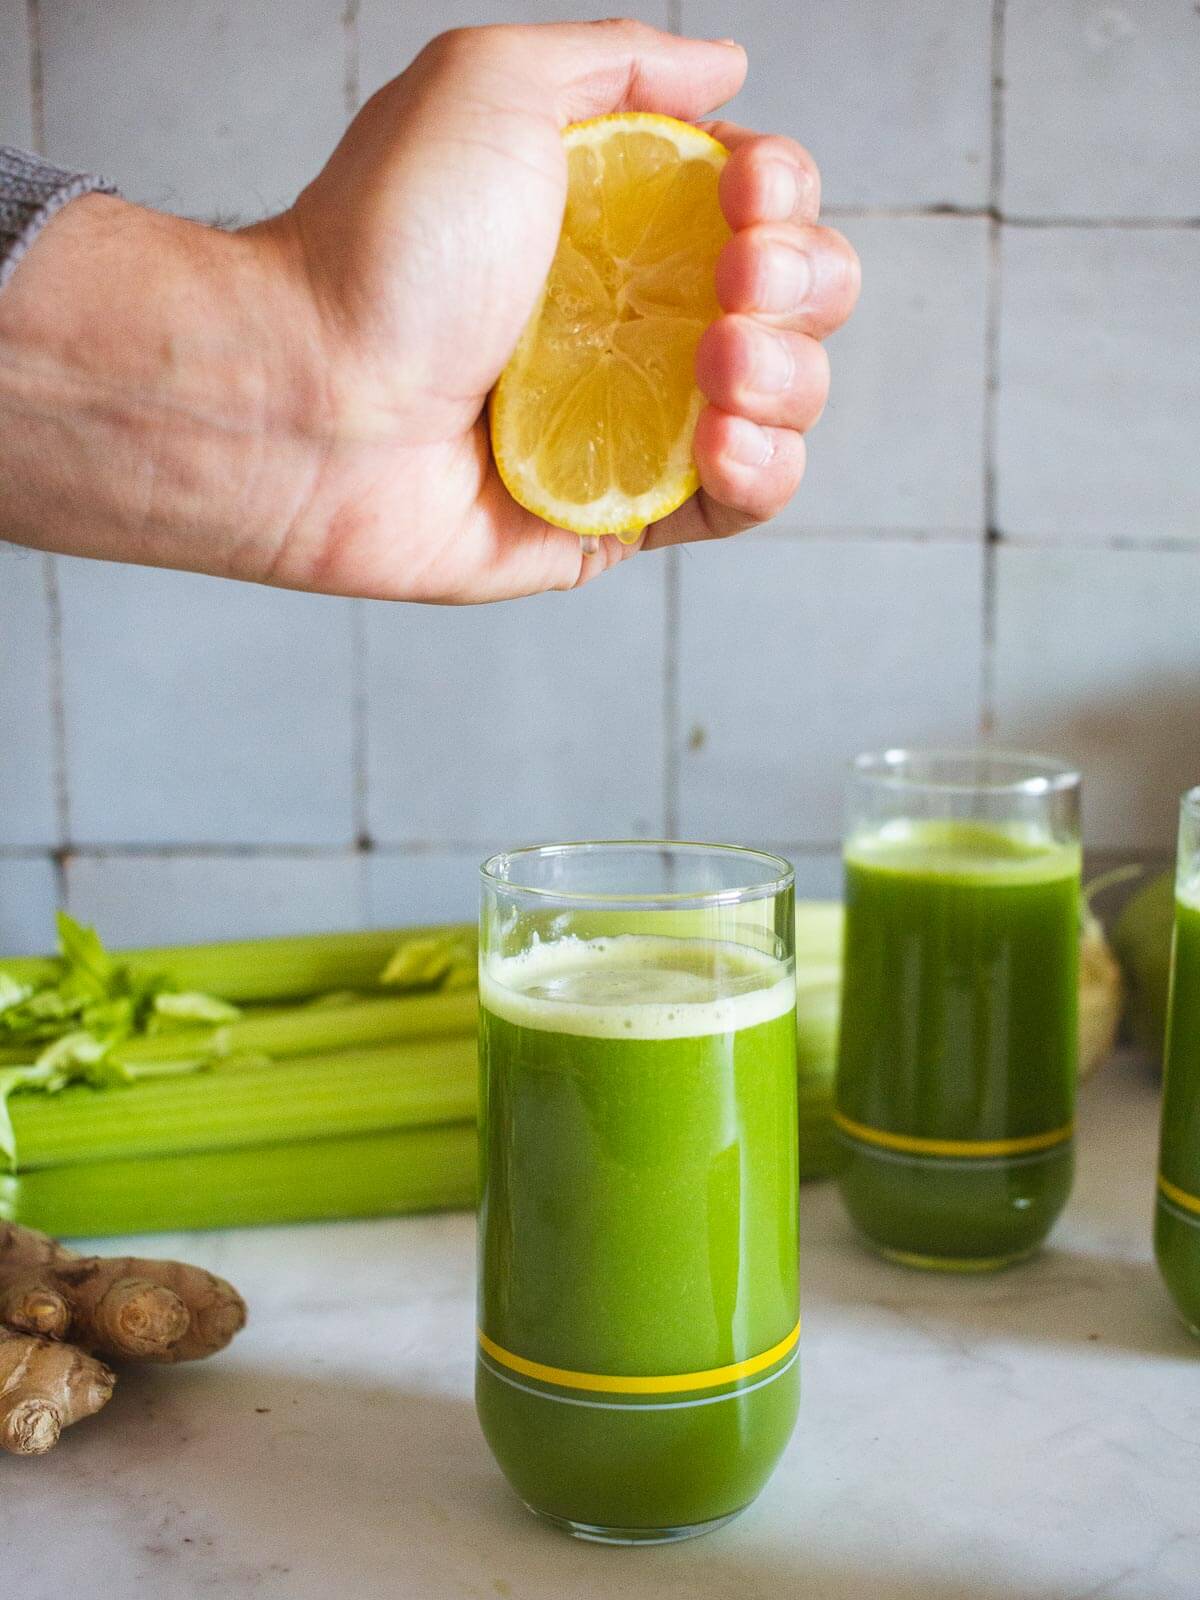 optionally add lemon juice to your celery juice